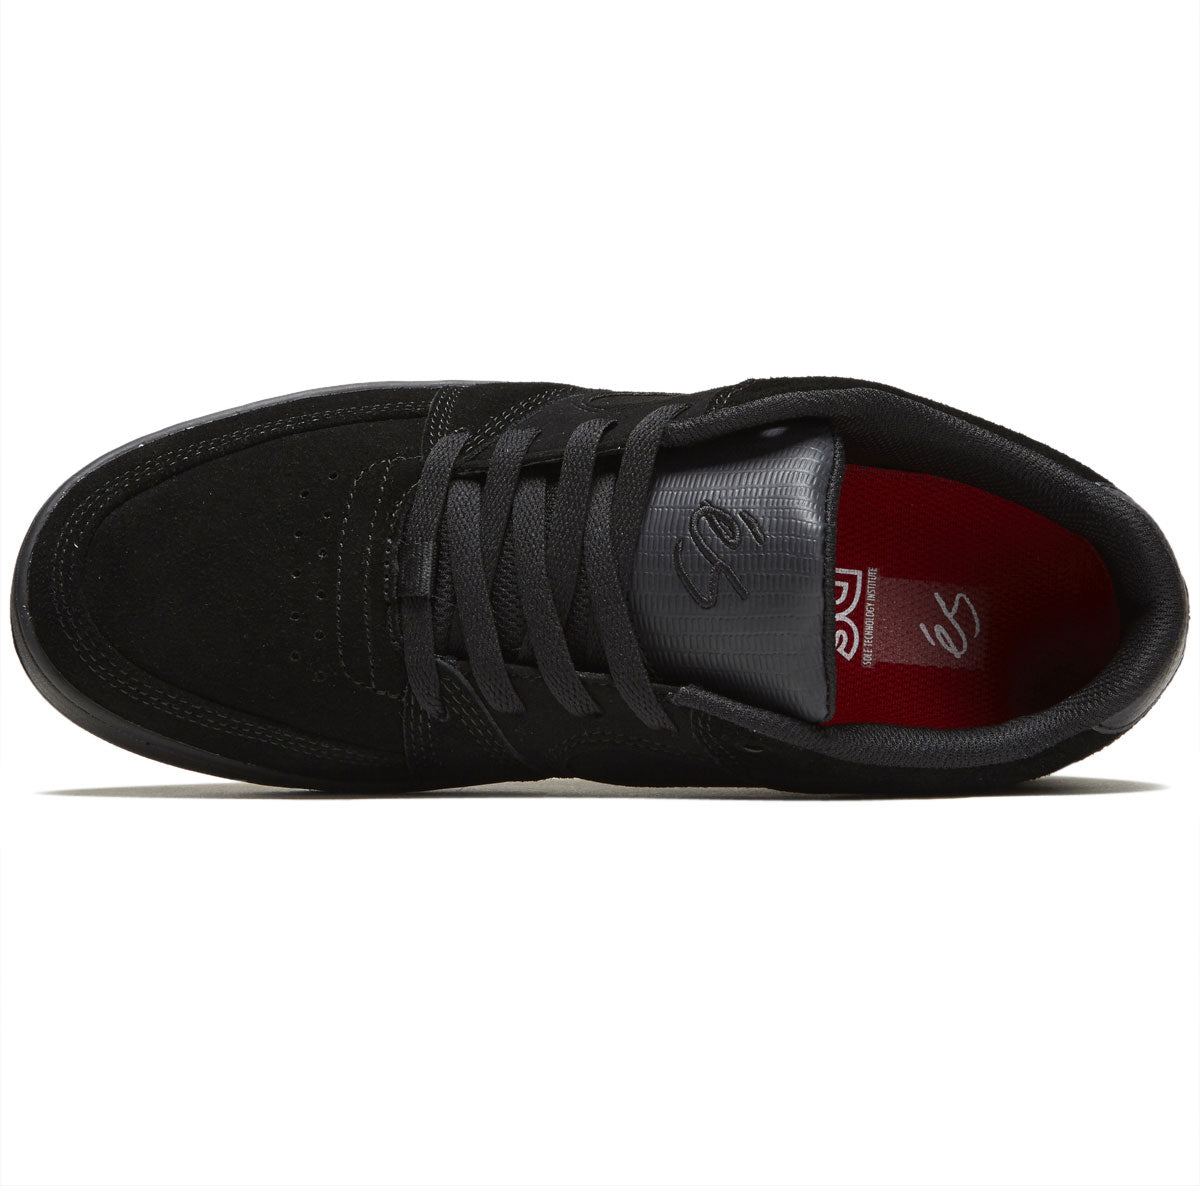 eS Accel Slim Shoes - Black/Black/Black image 2